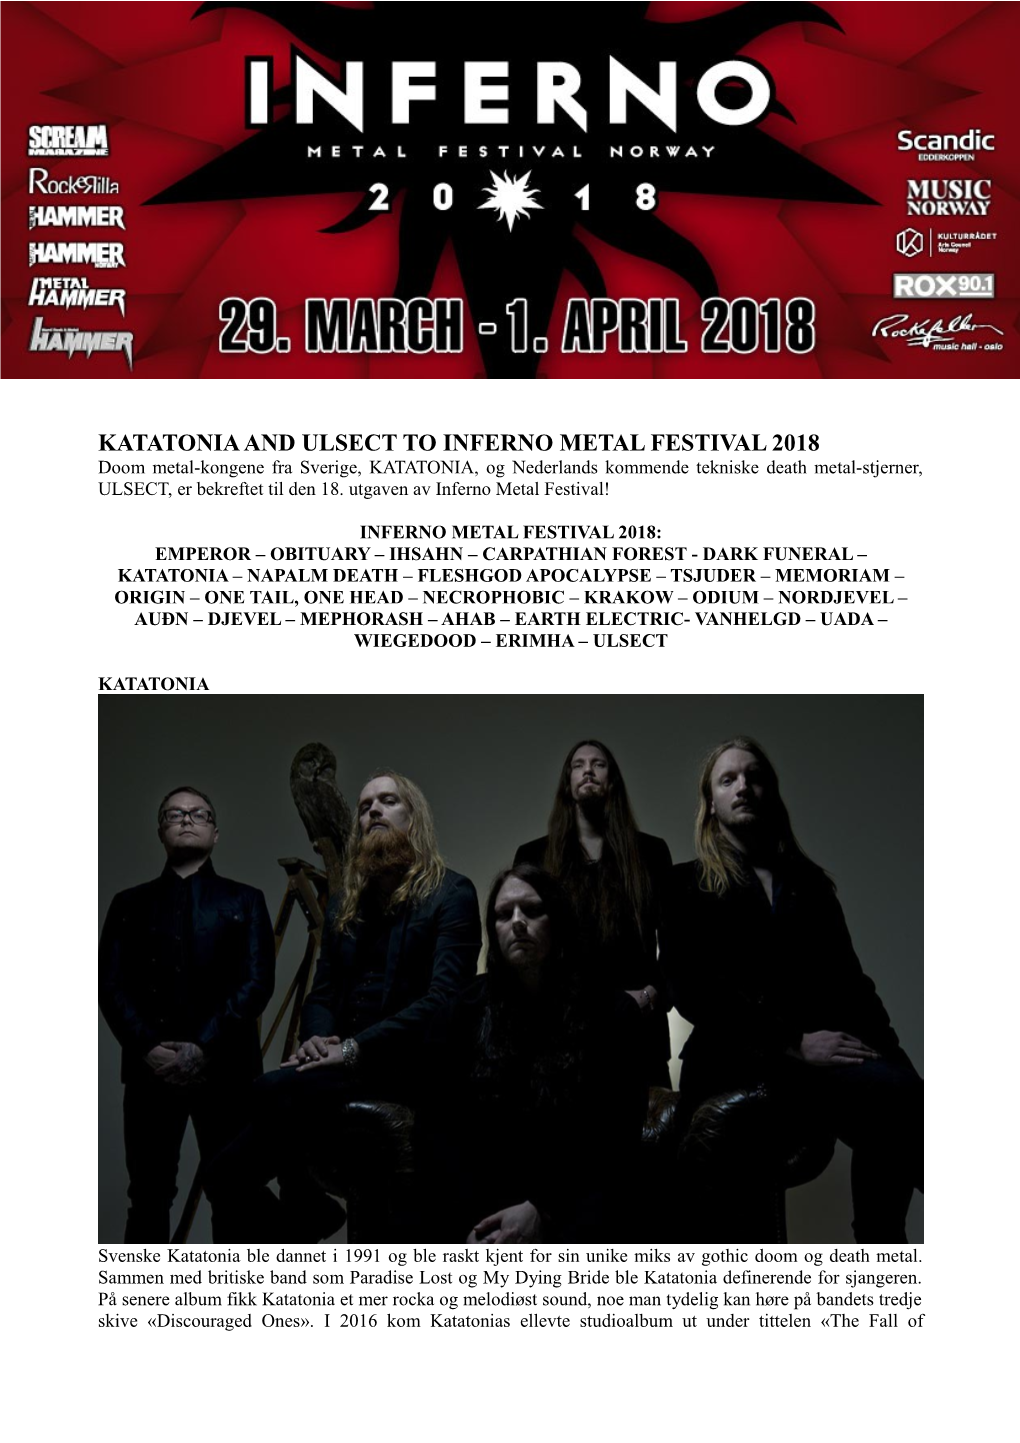 Katatonia and Ulsect to Inferno Metal Festival 2018